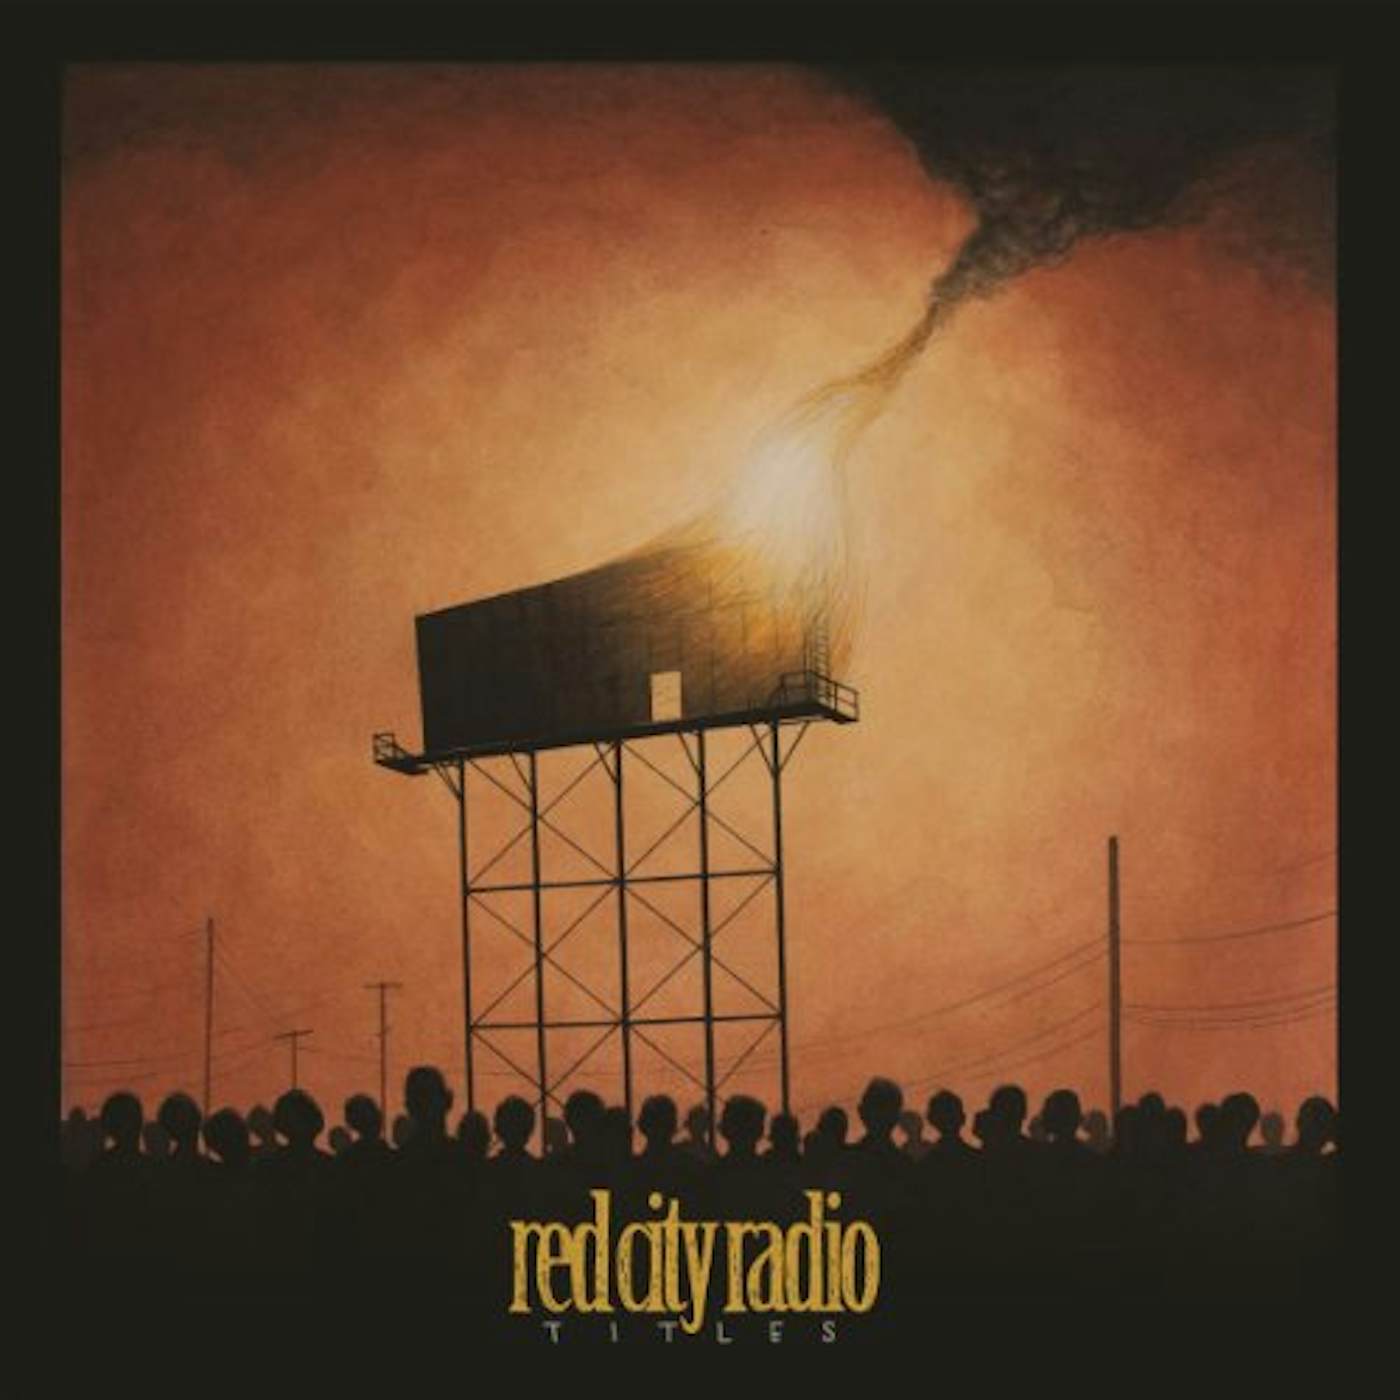 Red City Radio Titles Vinyl Record